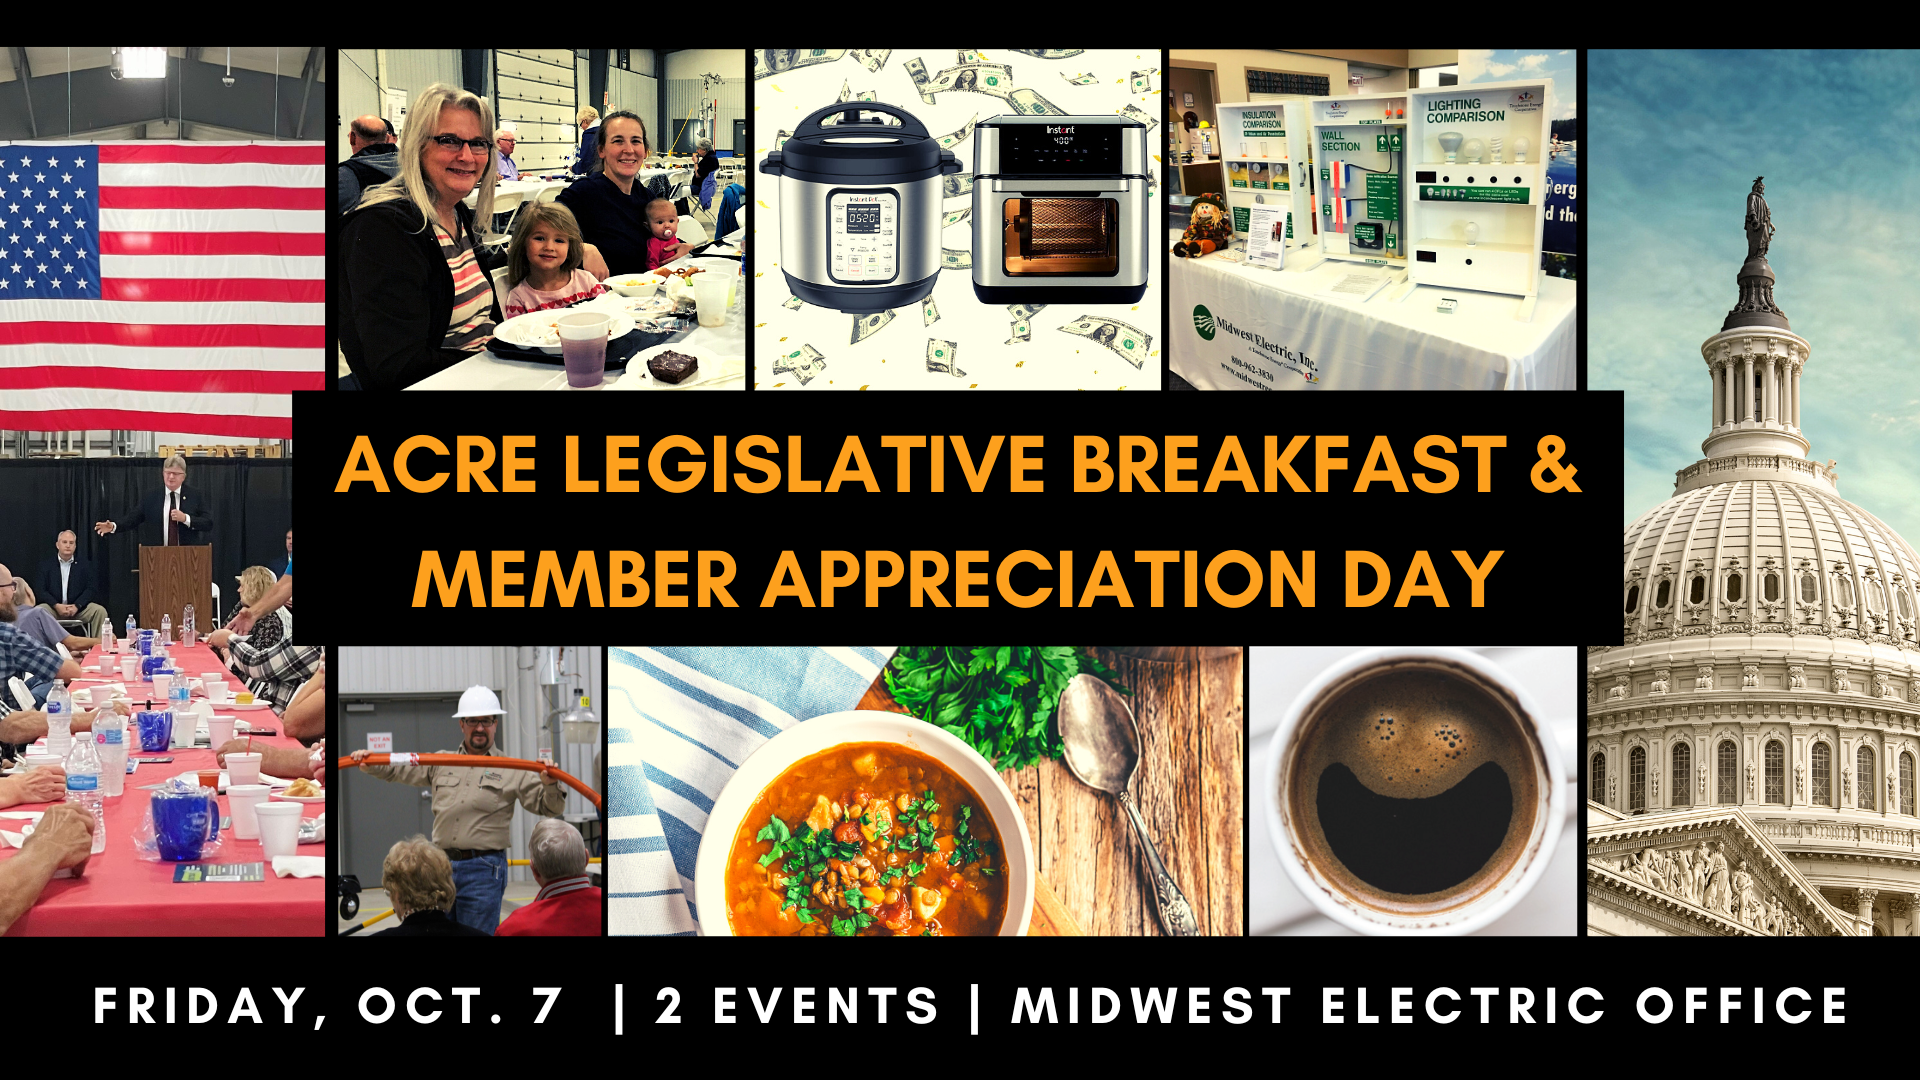 Member Appreciation Day and ACRE legislative breakfast